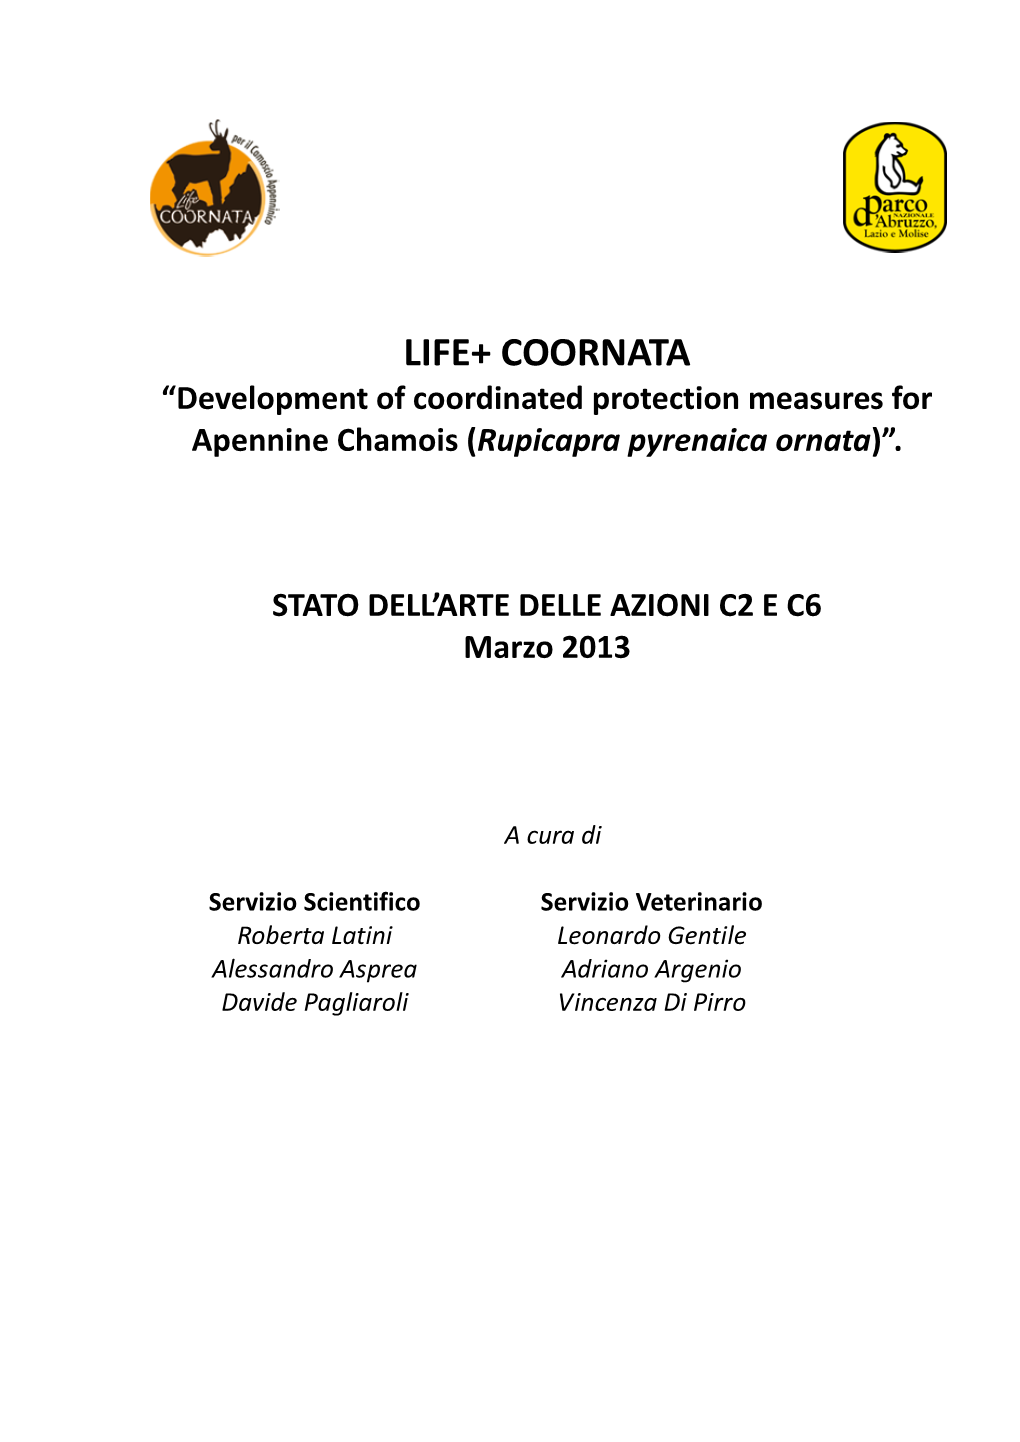 LIFE+ COORNATA “Development of Coordinated Protection Measures for Apennine Chamois (Rupicapra Pyrenaica Ornata)”